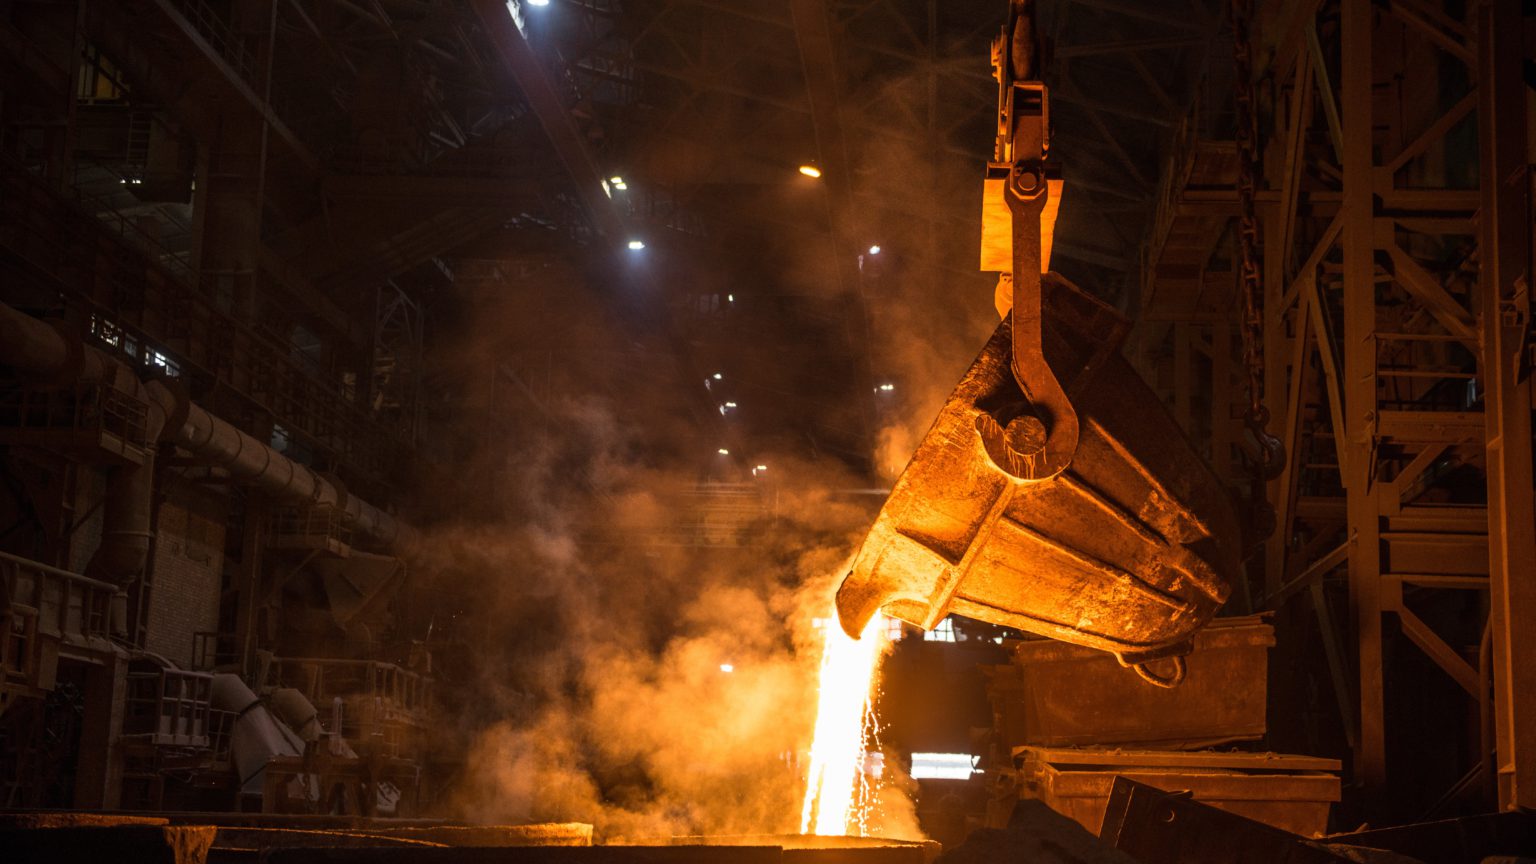 Iron ore price rises despite flat demand from steelmakers